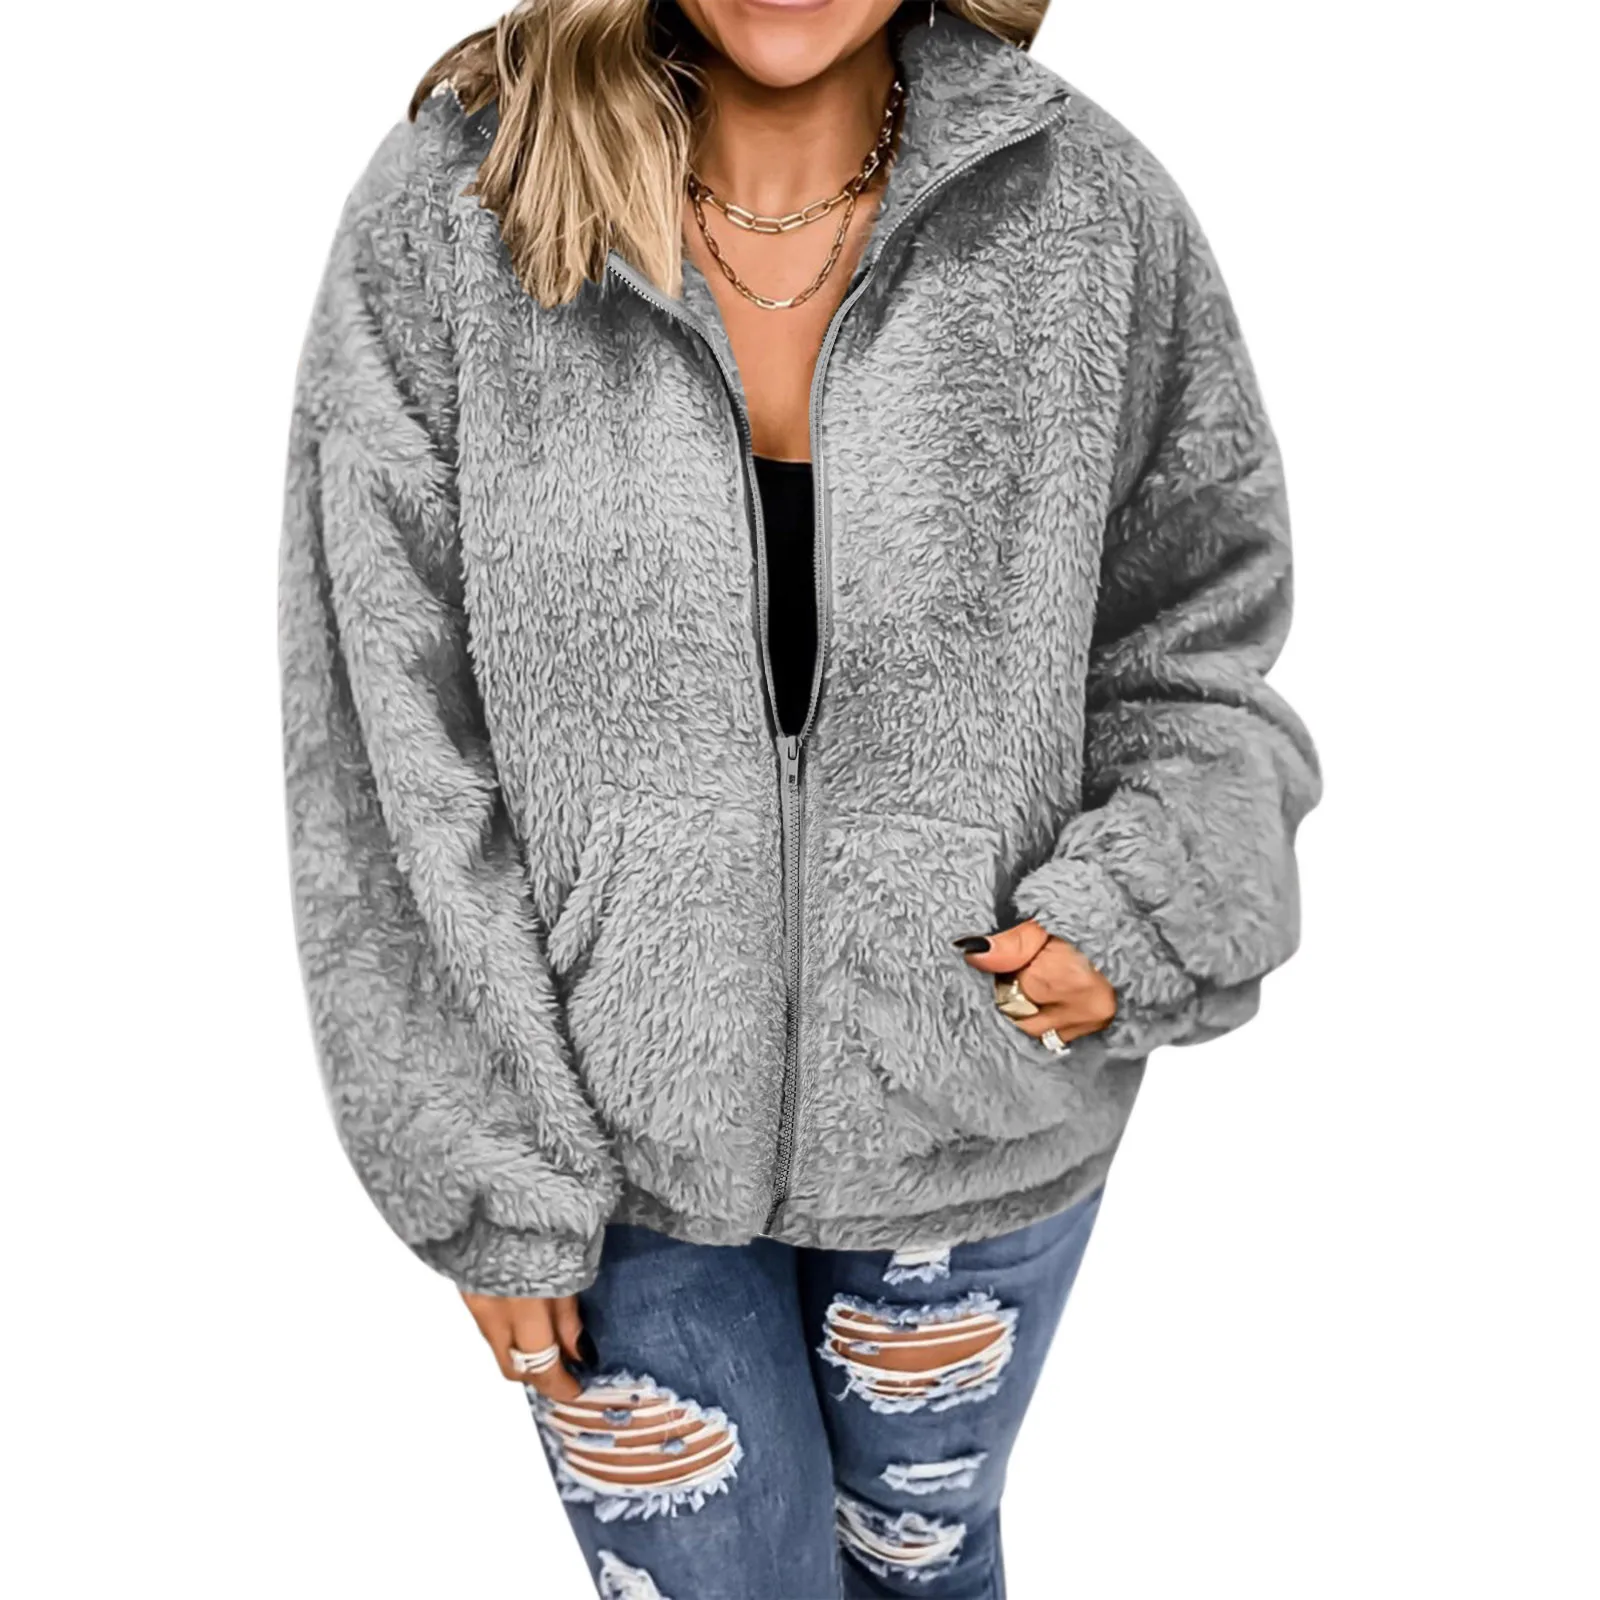 ModaParis Womens Fuzzy Hoodies Zipper Coat Casual Loose Pullover Fleece Outerwear Warm Sweatshirt with Pocket 